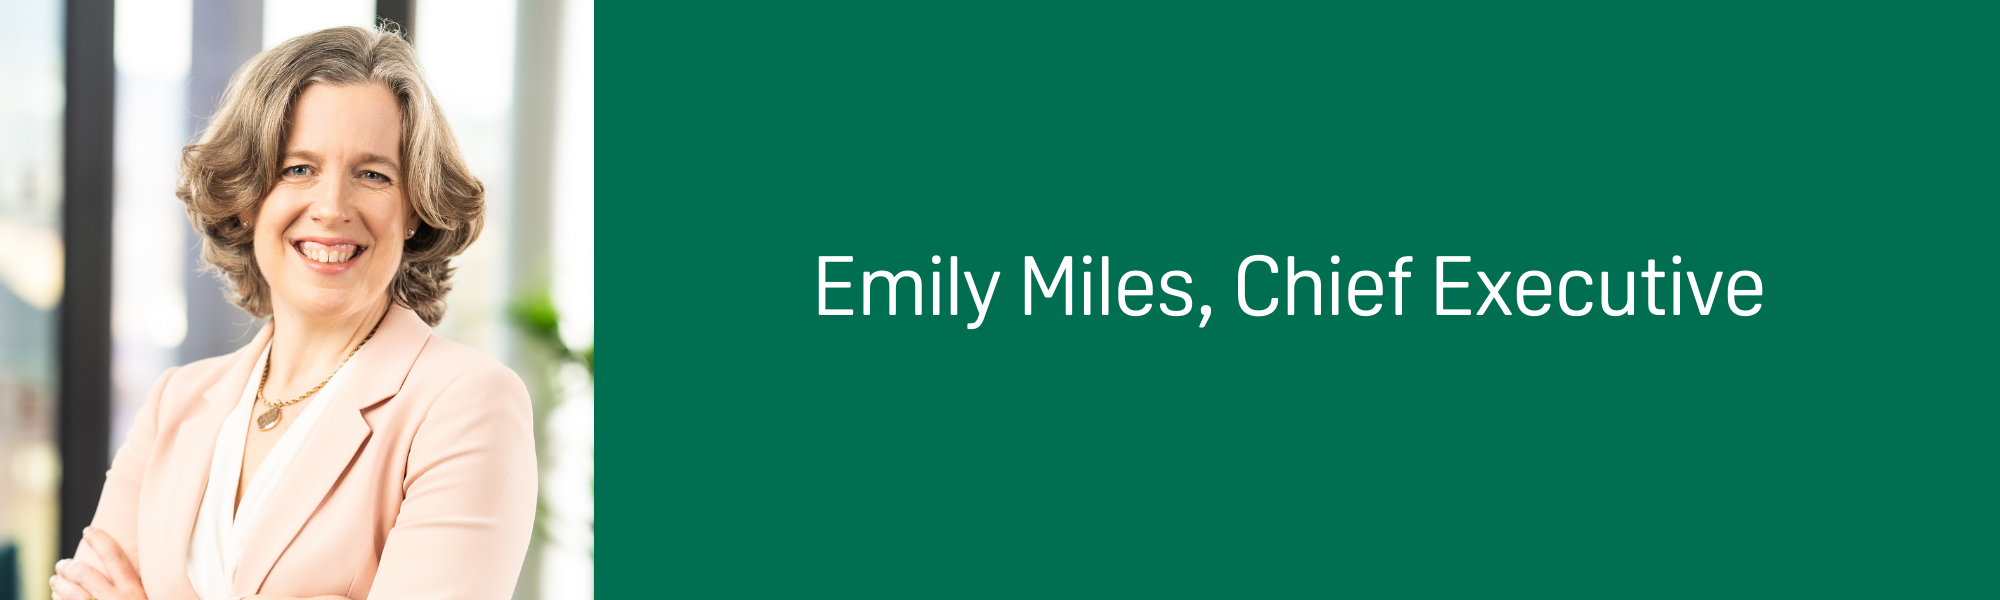 Emily Miles, Chief Executive